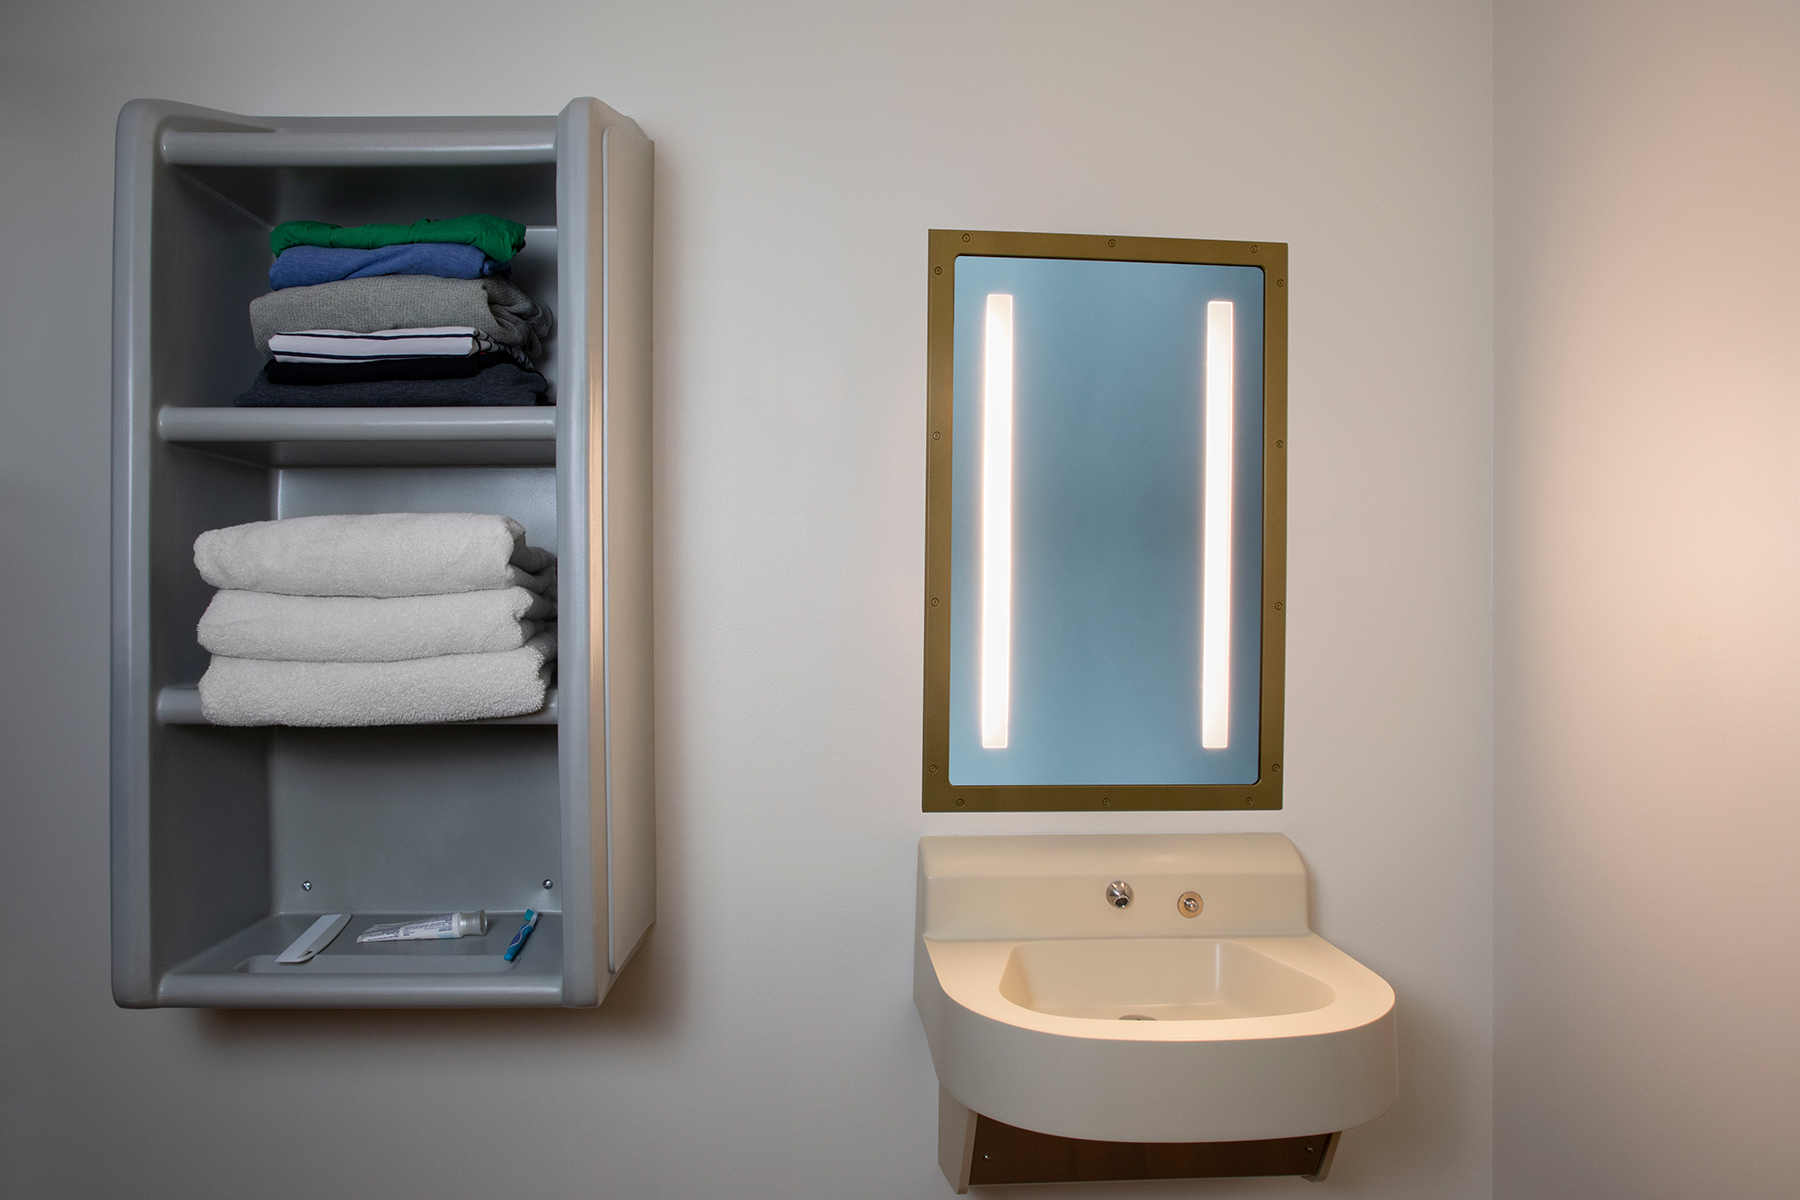 Sole rectangular illuminated mirror in a behavioral health bathroom